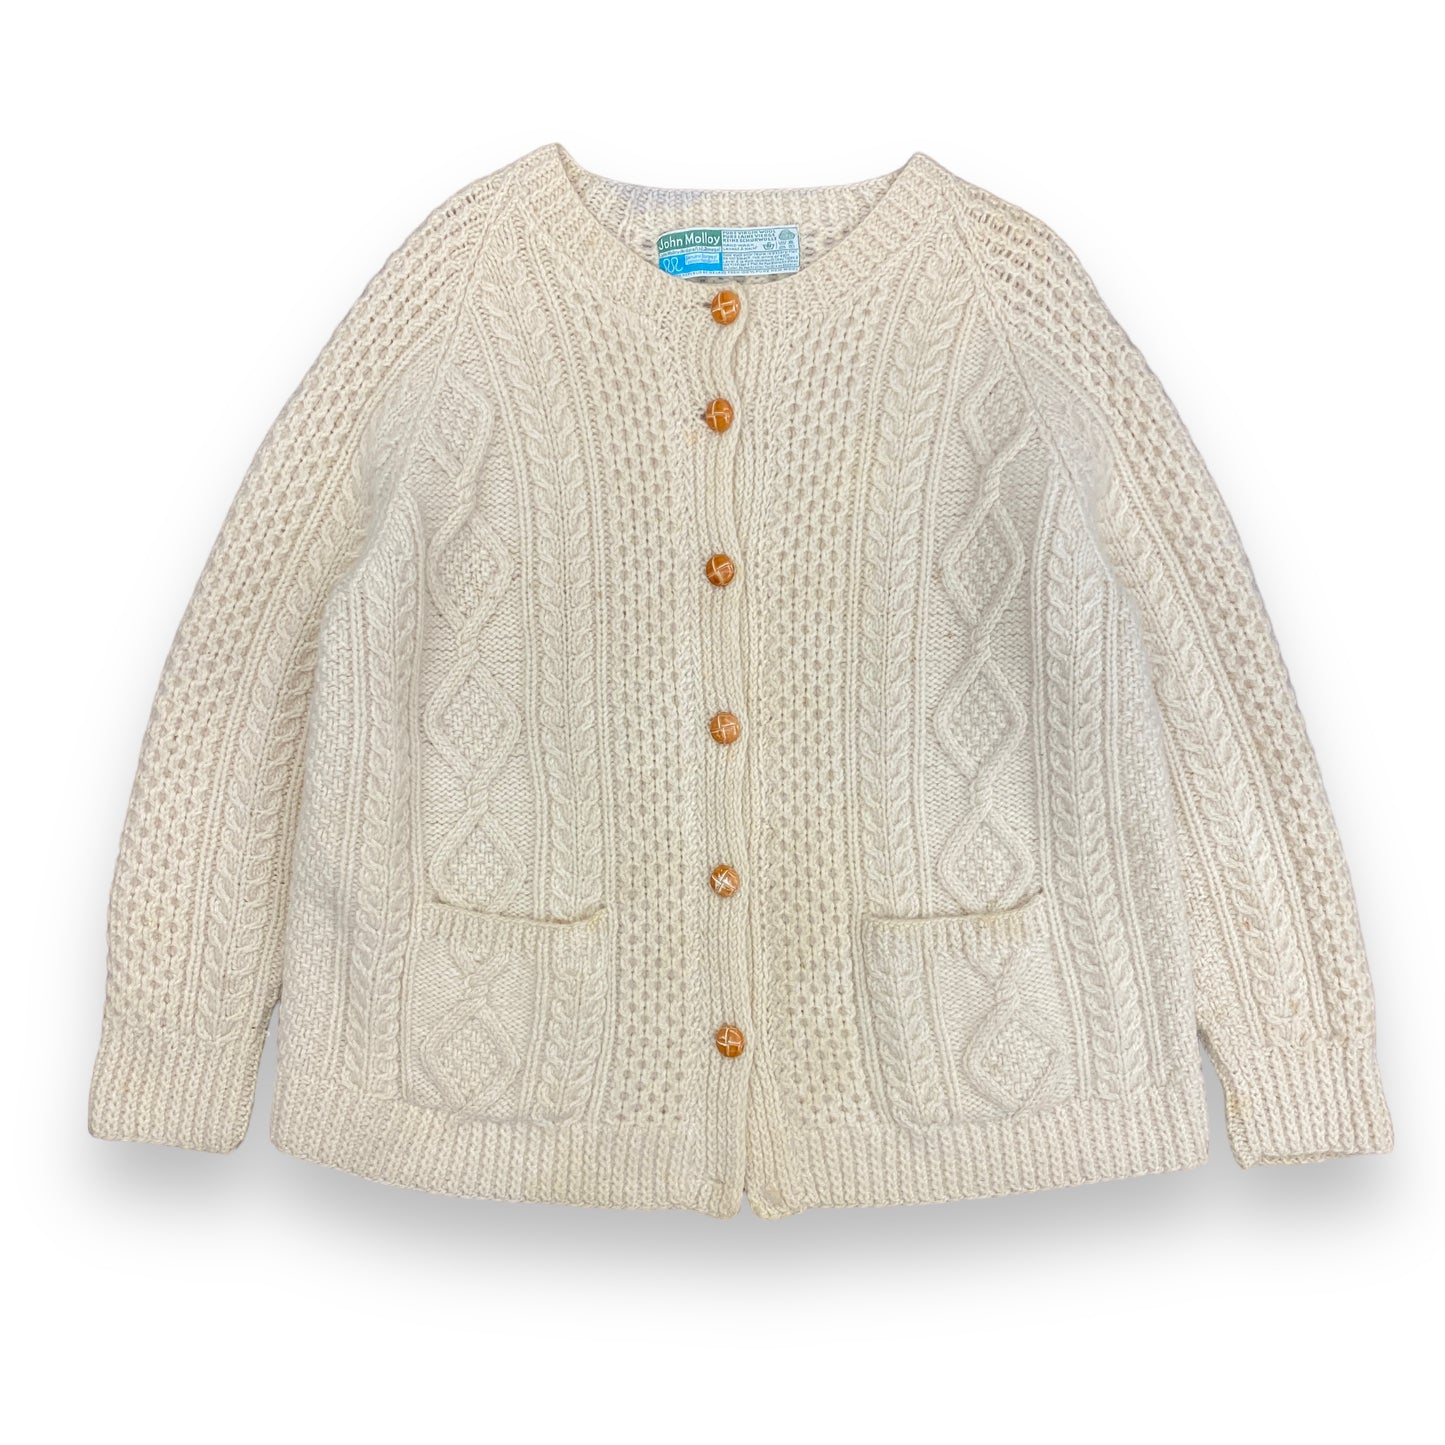 Vintage John Molloy Knit Donegal Wool Cardigan - Size Medium/Large